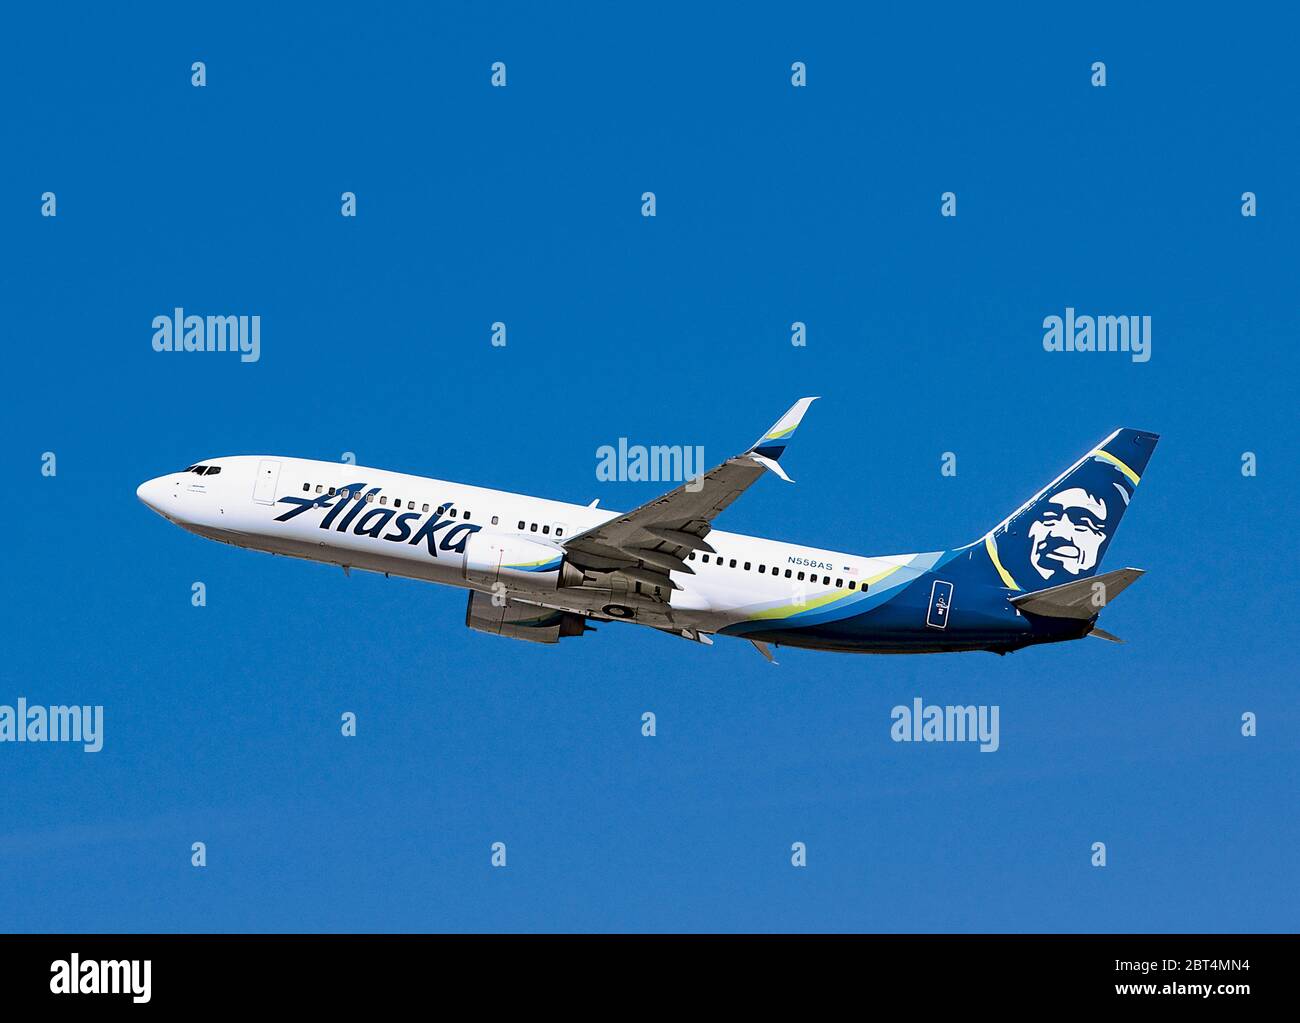 Alaska Airlines Jet Airplane Boeing 737-800 Stock Photo